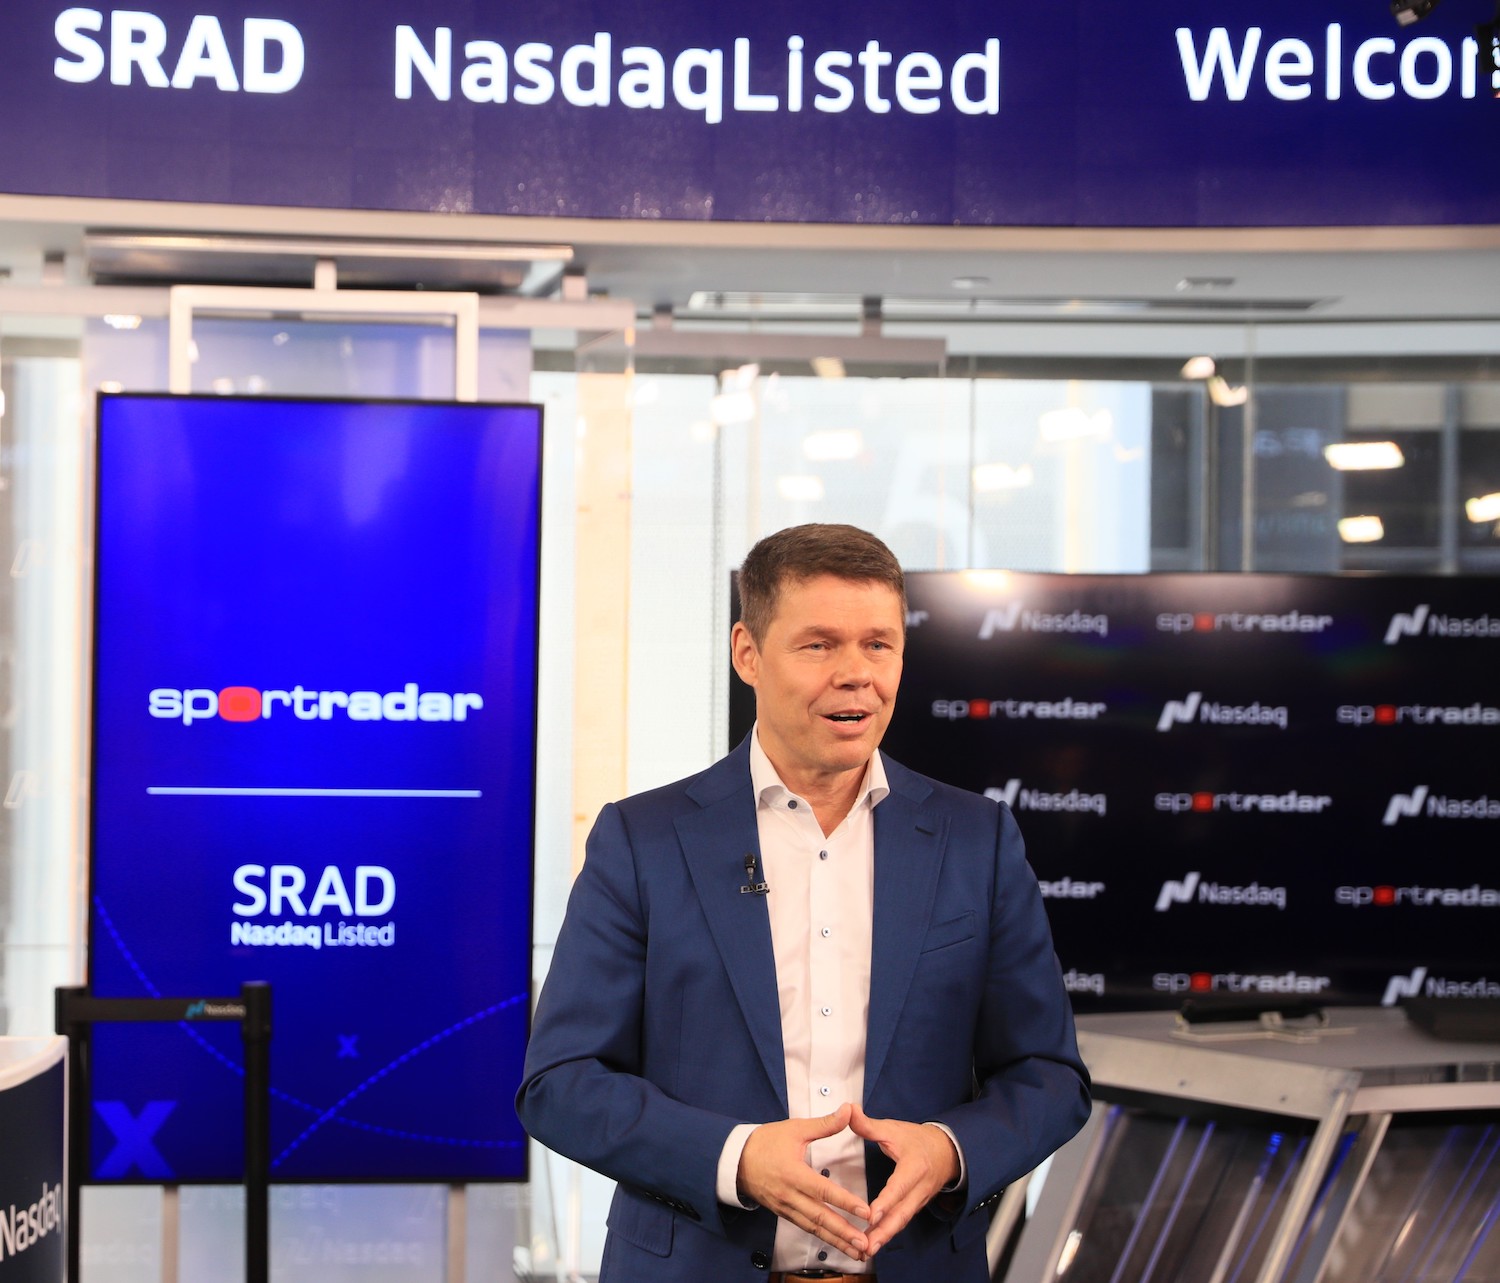 Sportradar acquires Synergy Sports